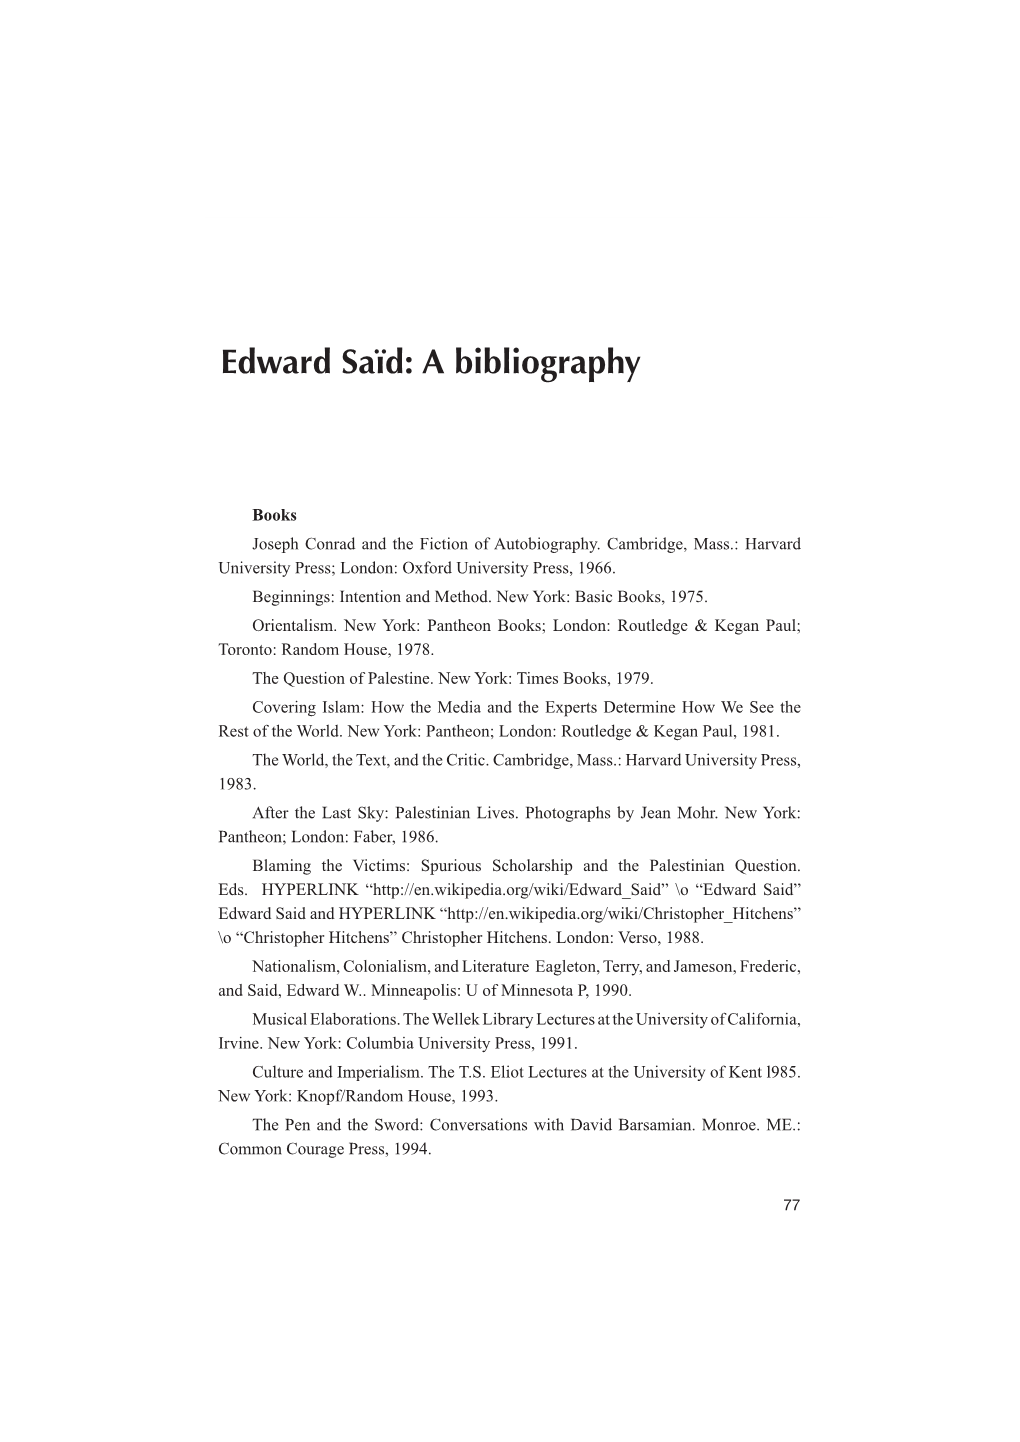 Edward Sa飀: a Bibliography